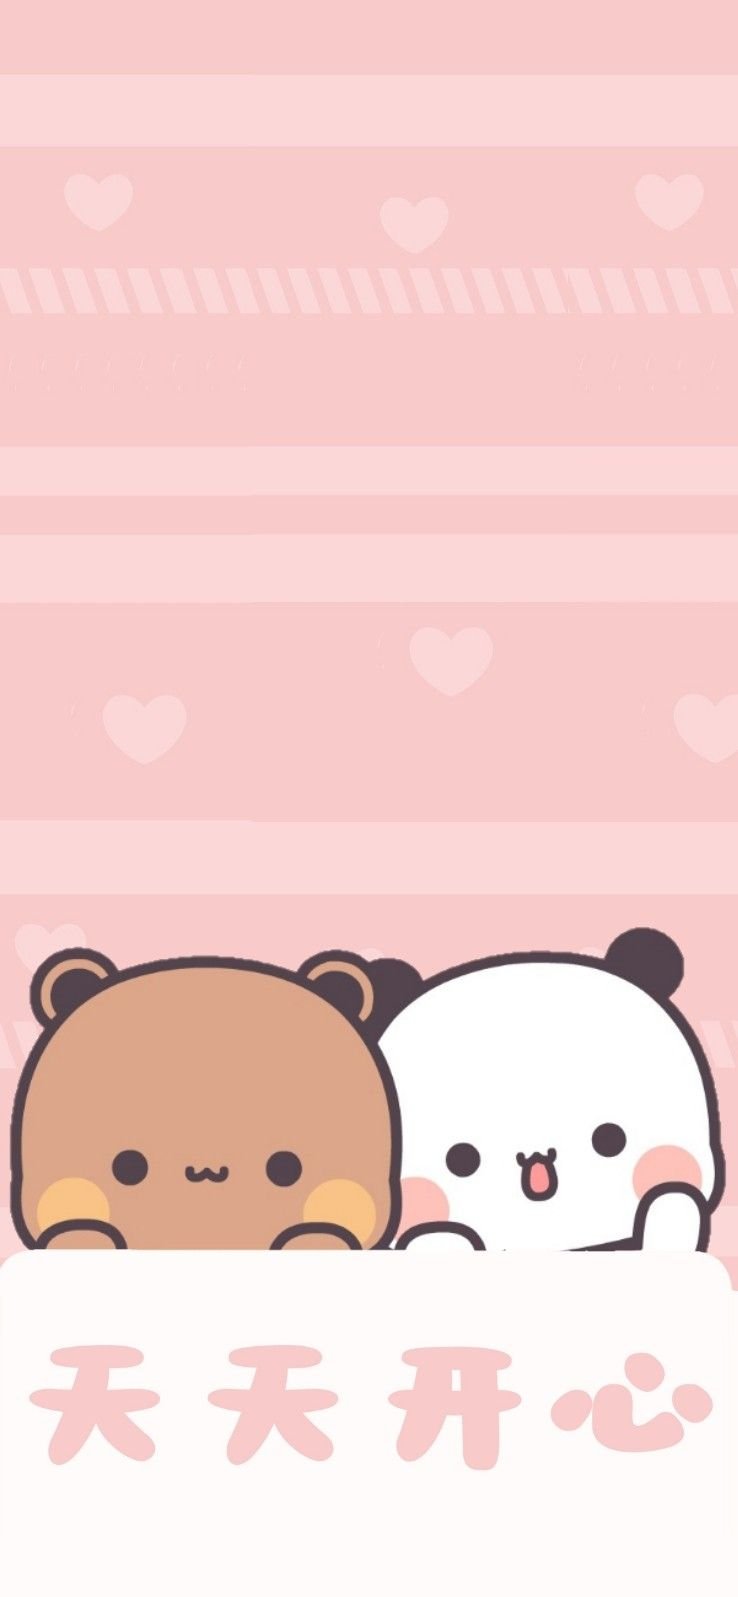 Cute white and brown bear Wallpaper